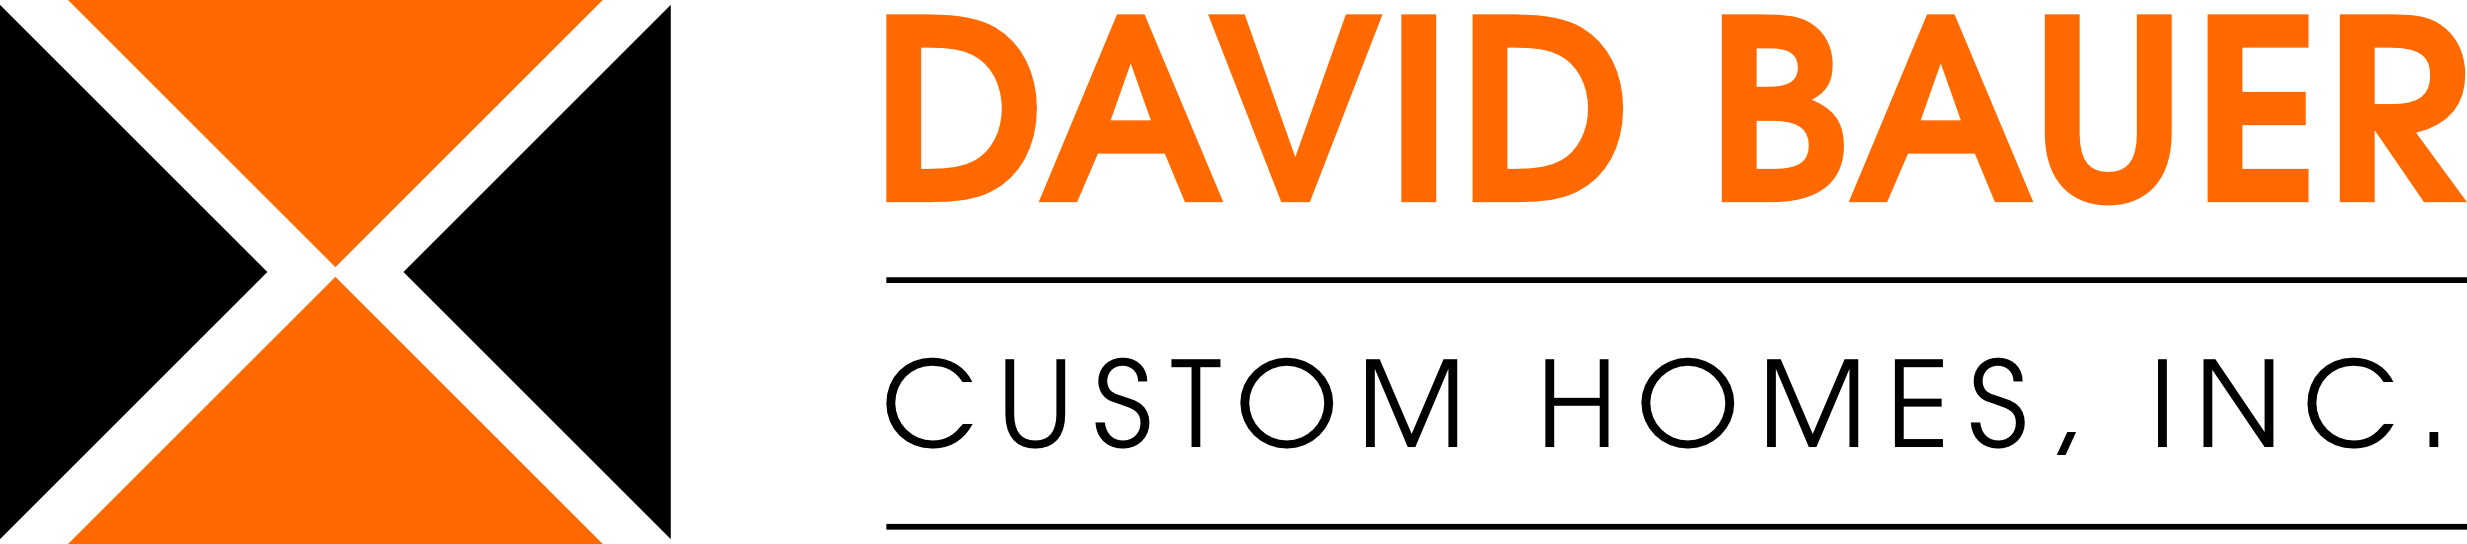 David Bauer Custom Homes, Inc. Logo